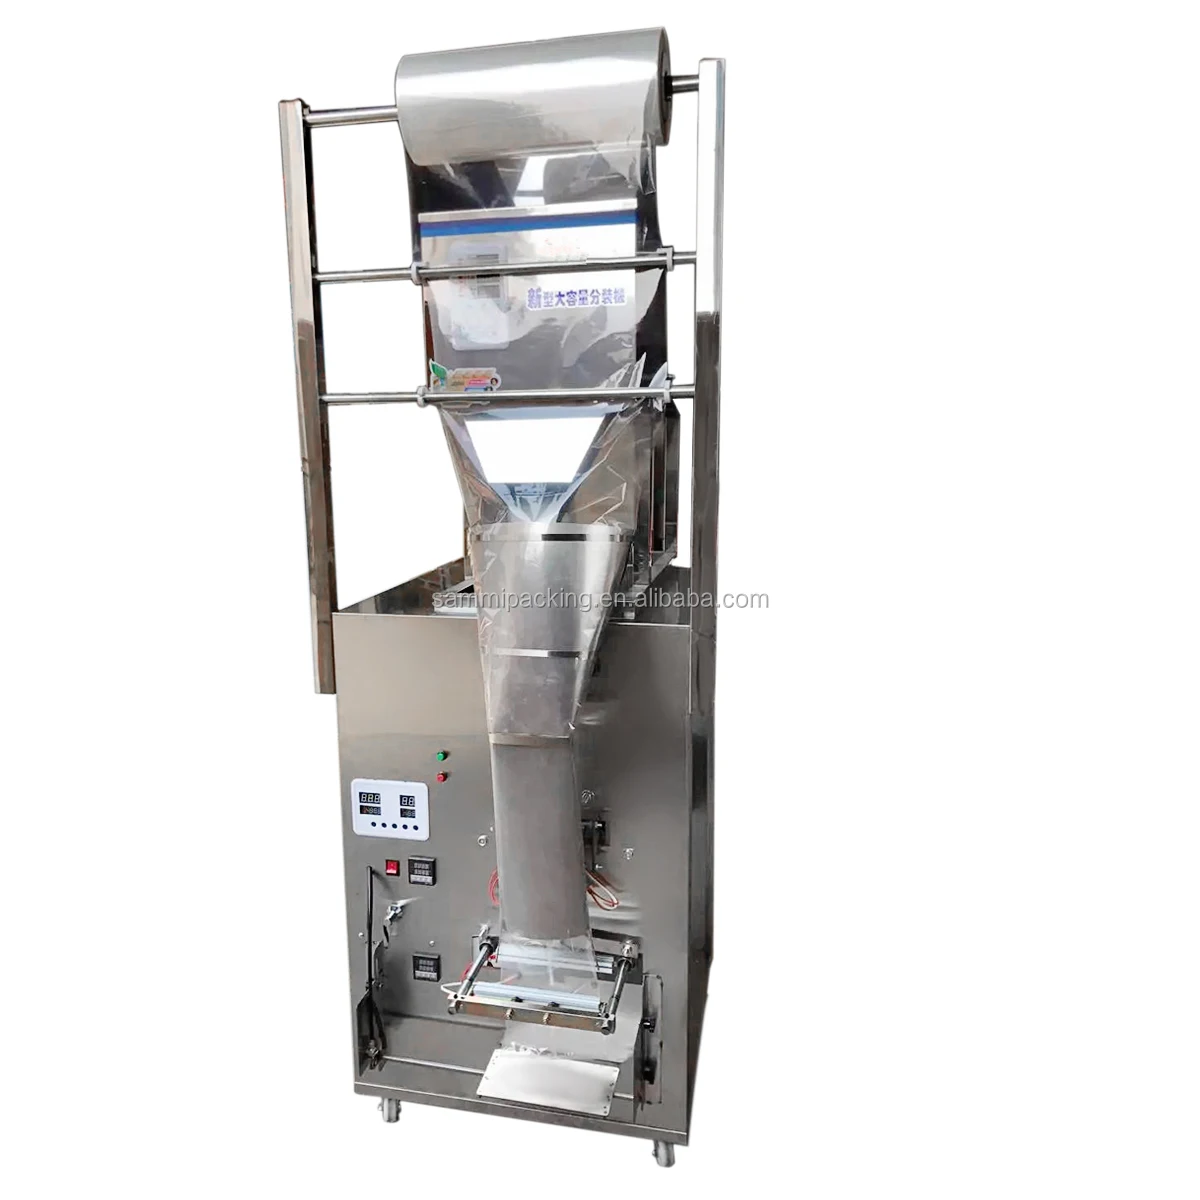 SMFZ-500 new model lager capacity grain/coffe/speice Powder Filling Packing Machine